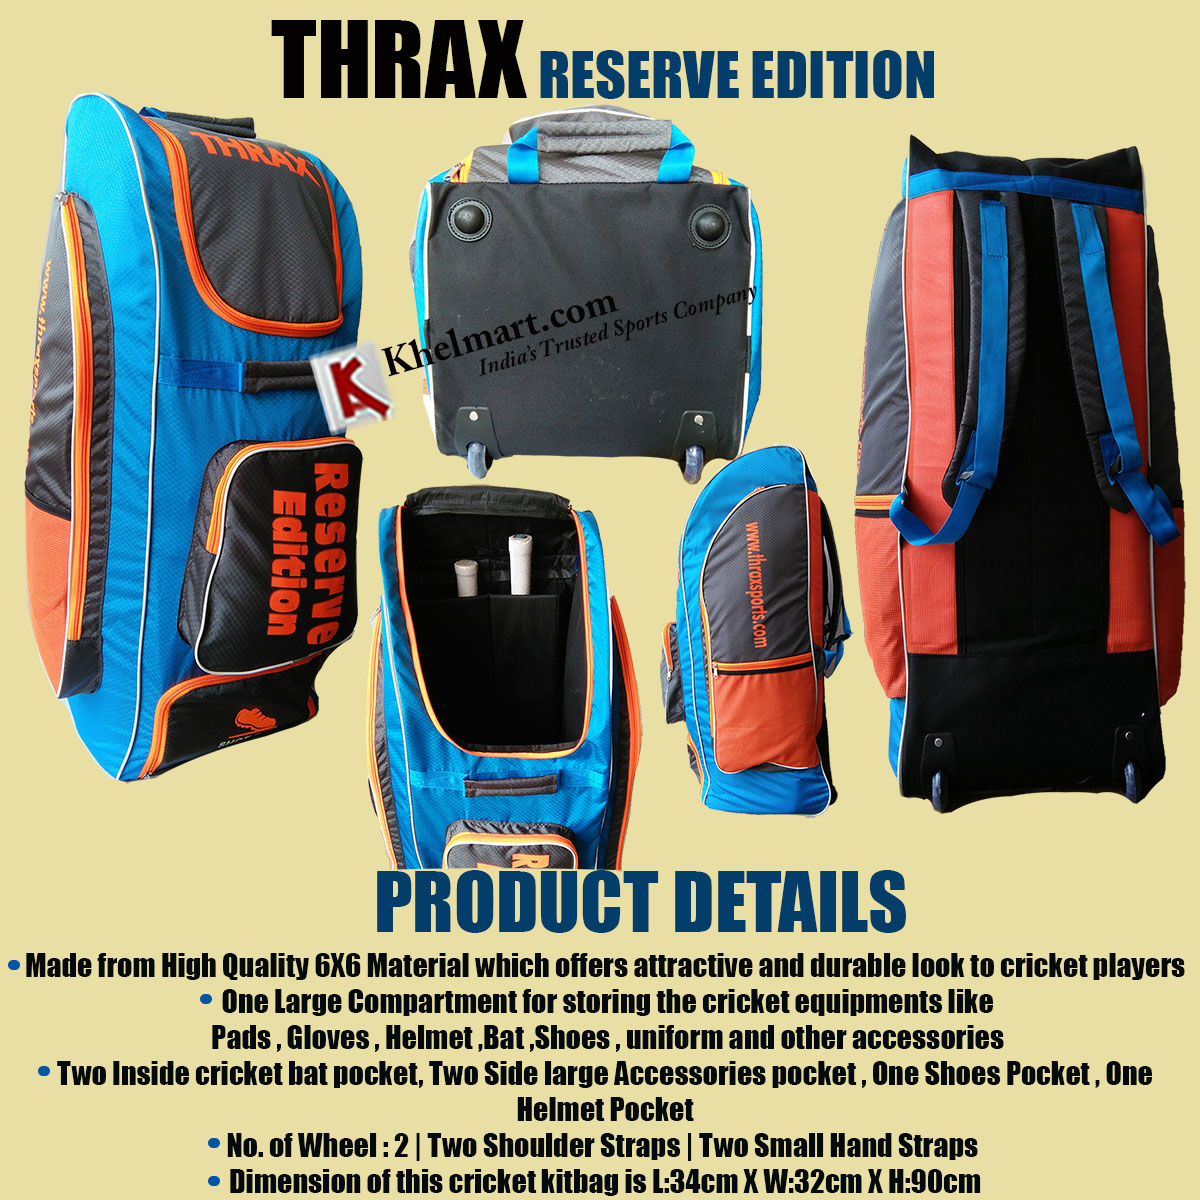 Thrax Reserve Edition Cricket Kit bag.jpg